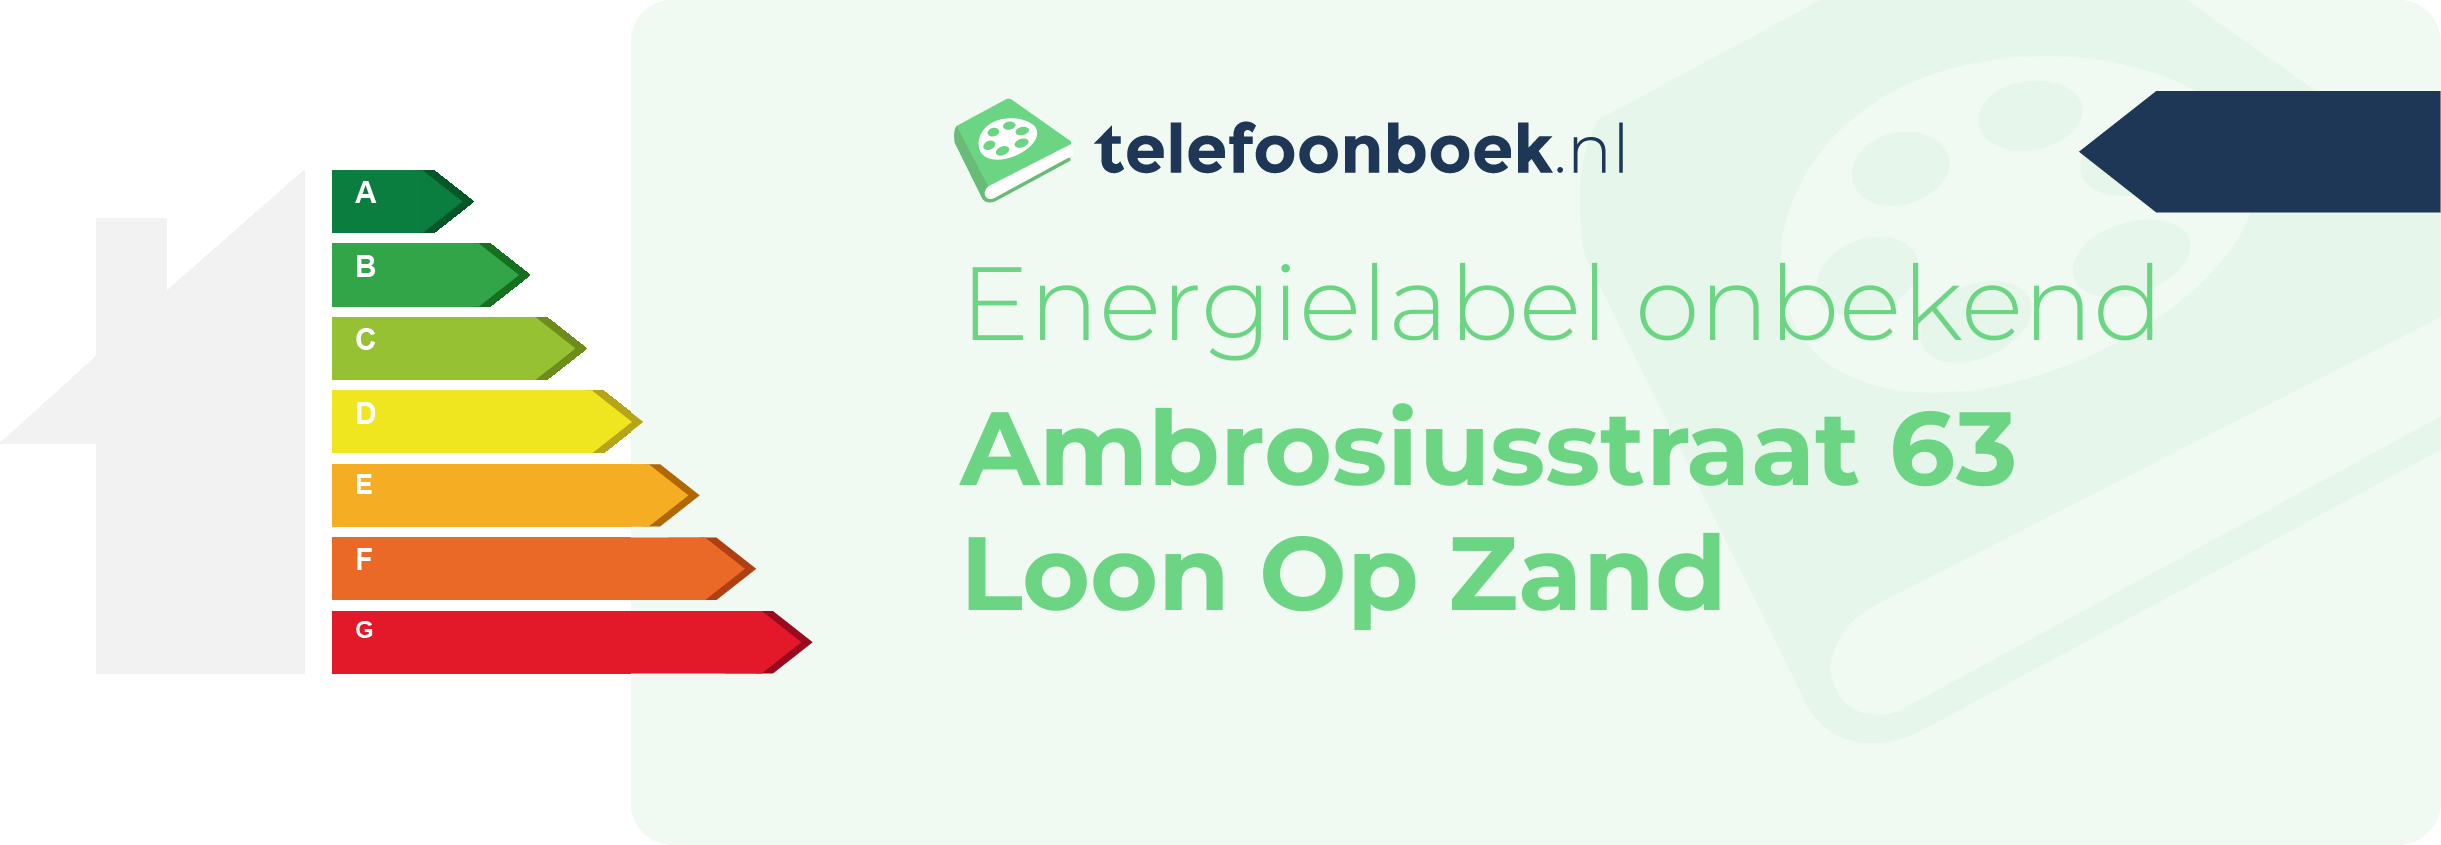 Energielabel Ambrosiusstraat 63 Loon Op Zand